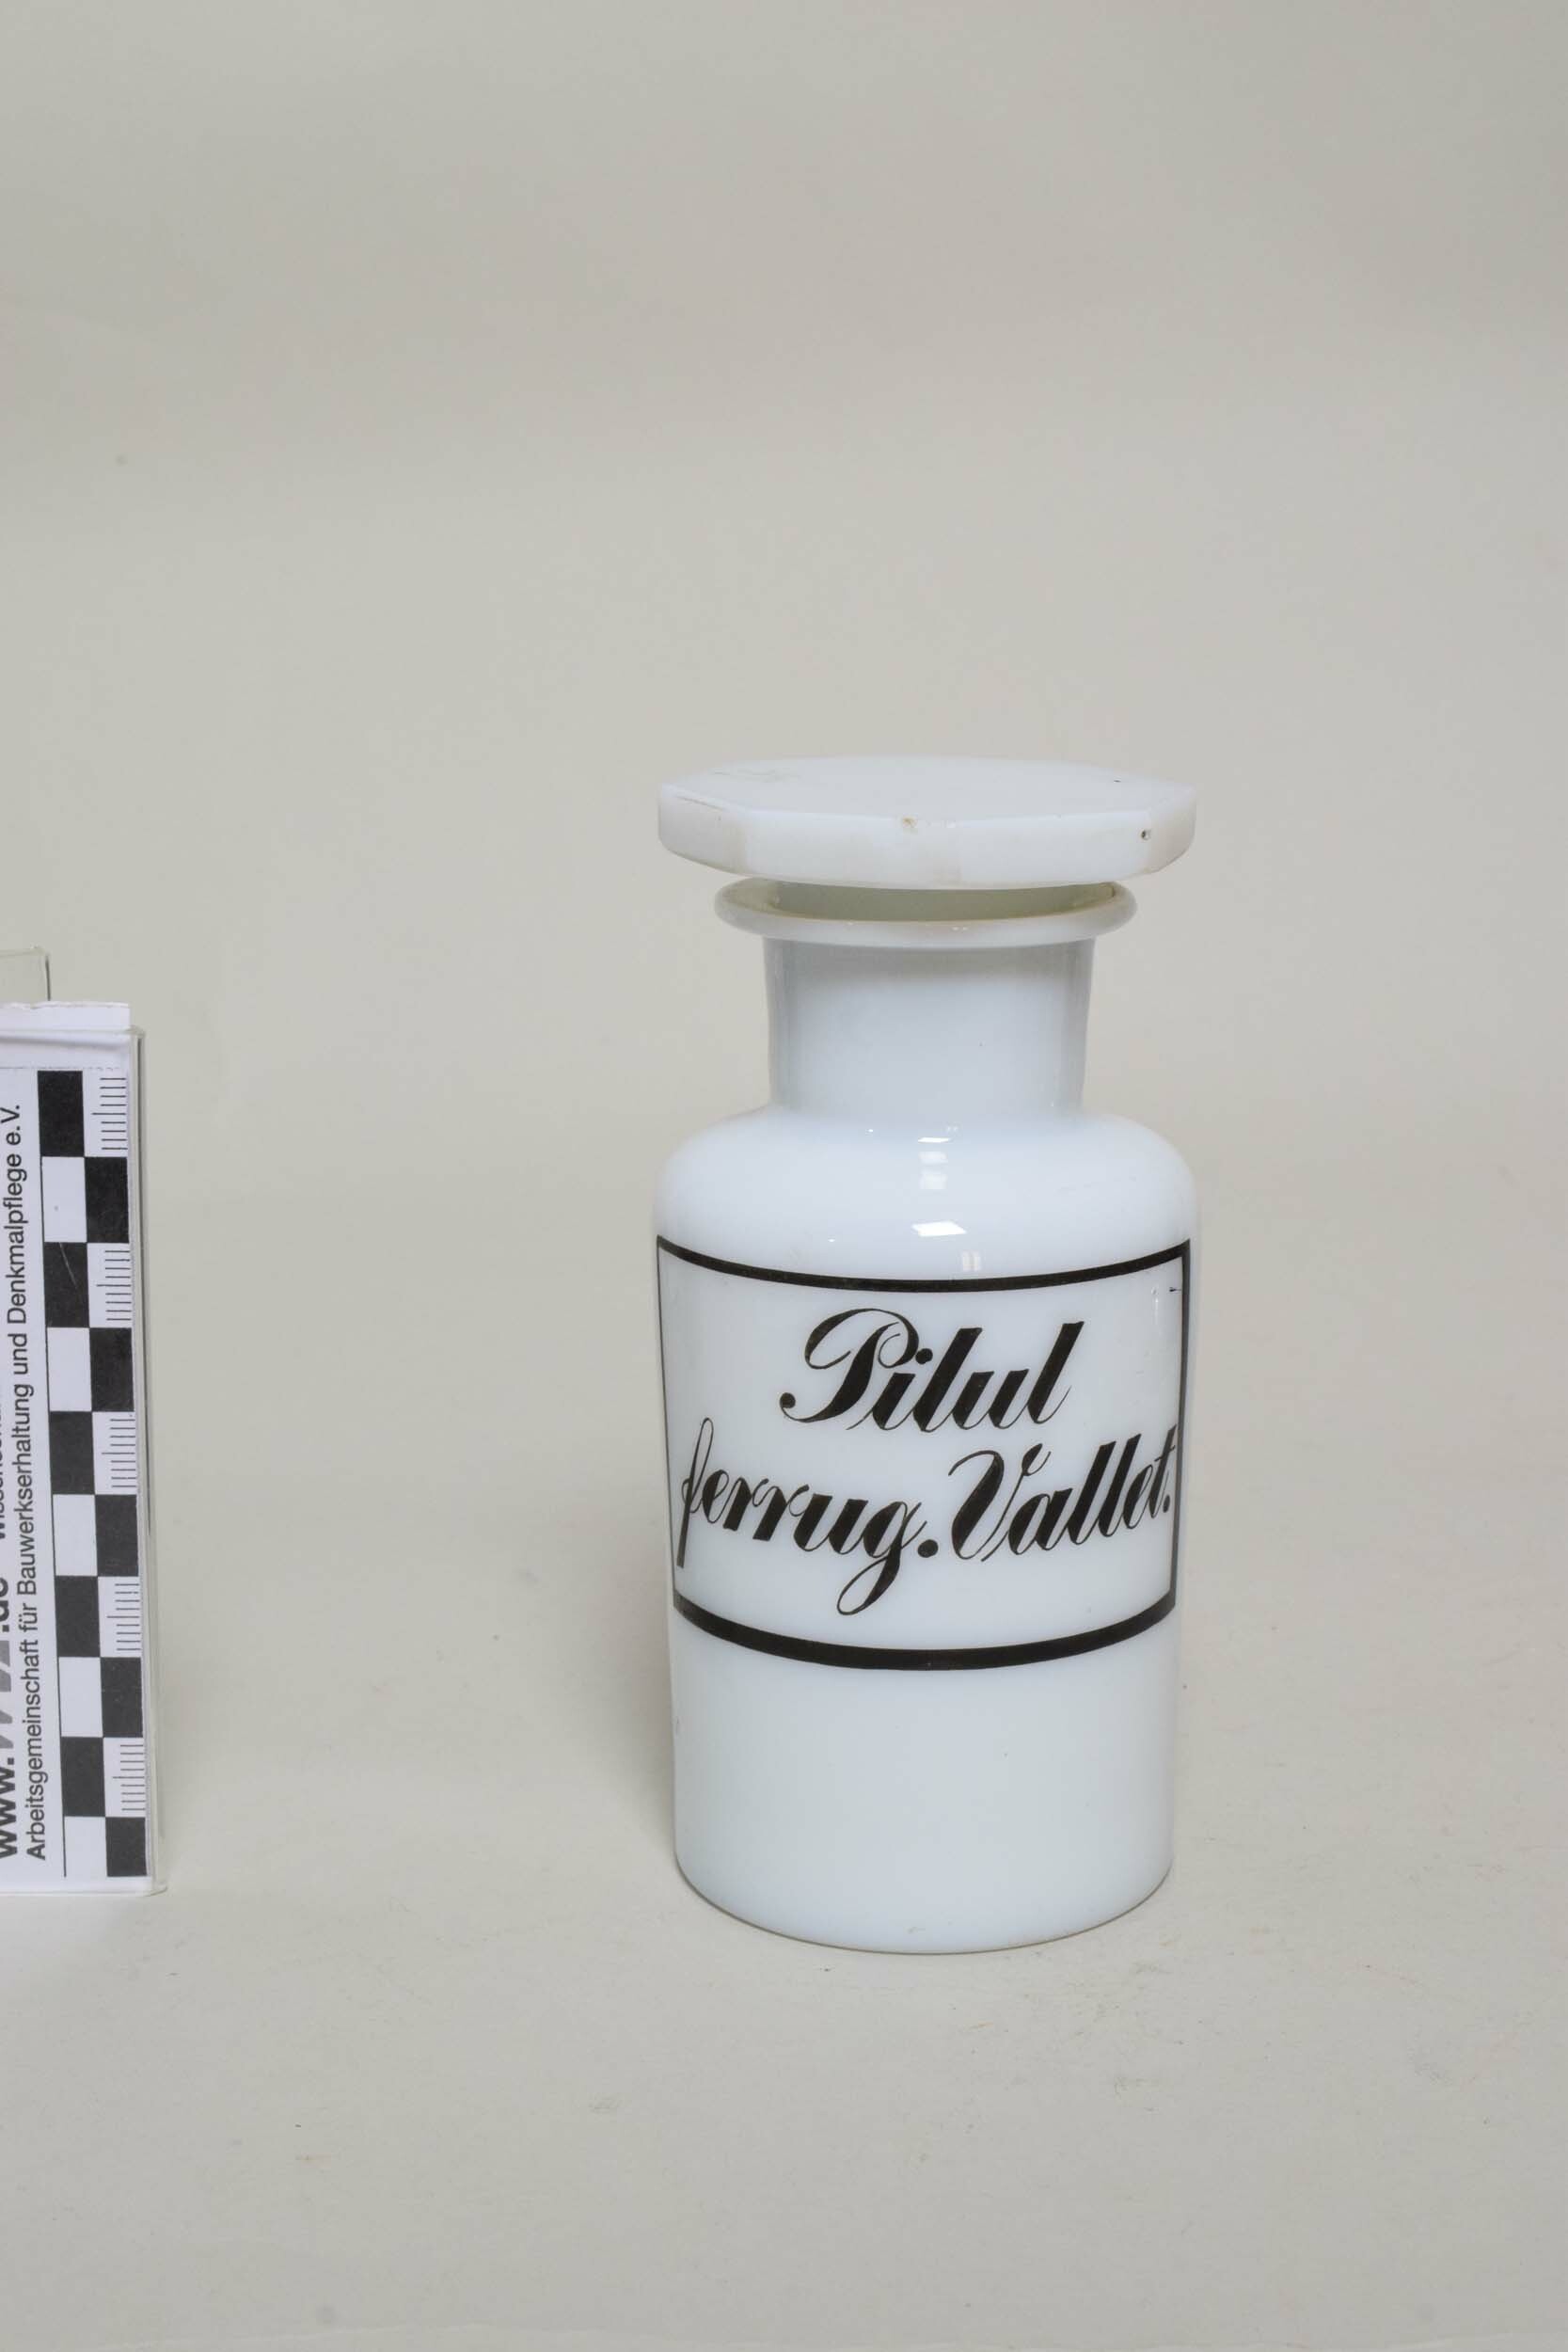 Apothekenflasche "Pilul ferrug. Vallet" (Knochenmehl) (Heimatmuseum Dohna CC BY-NC-SA)